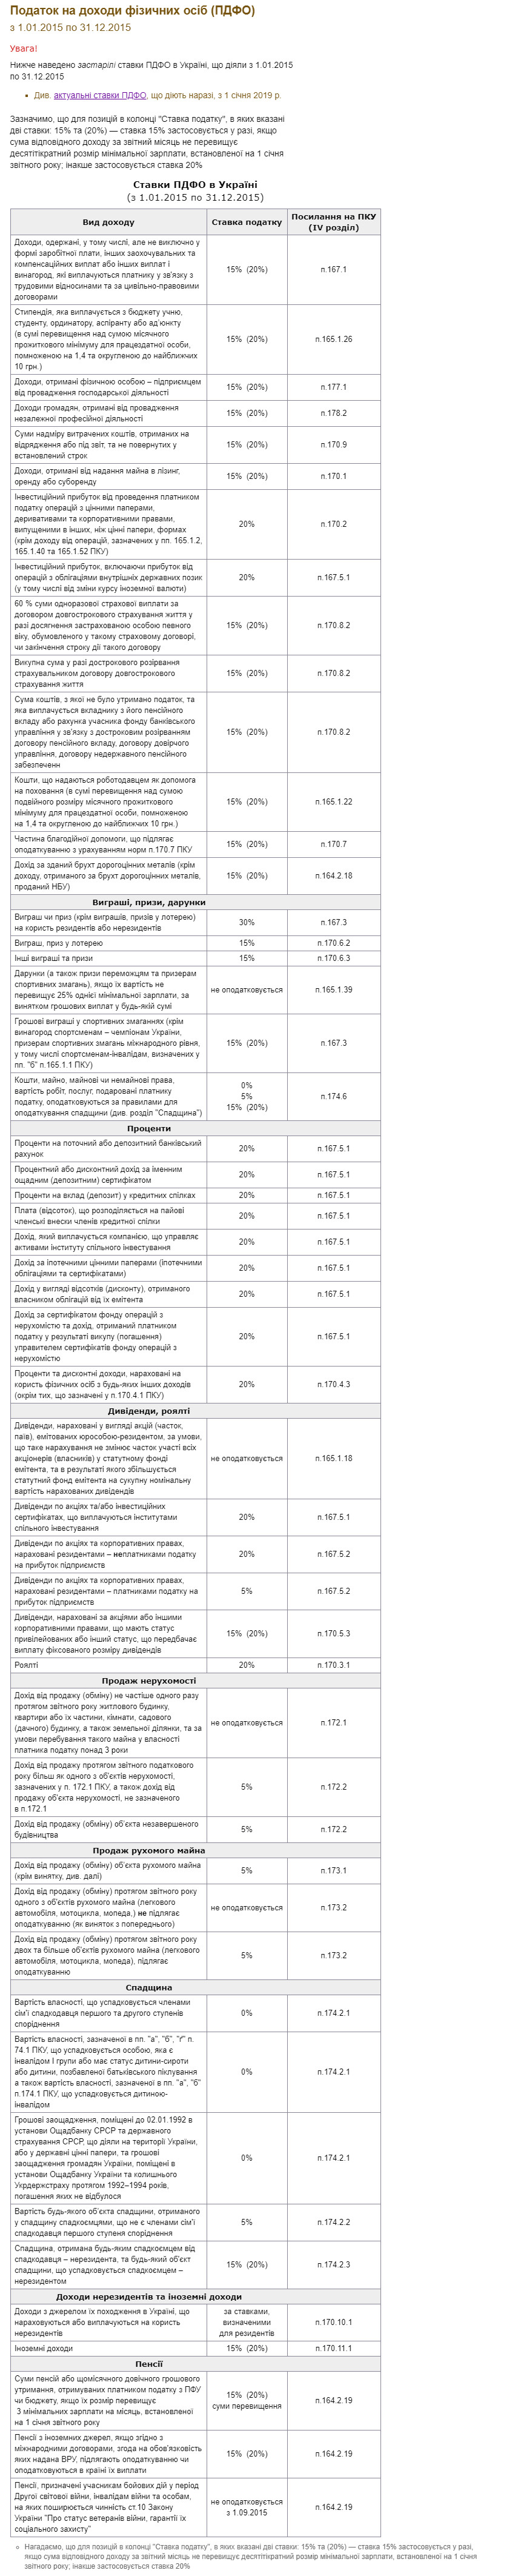 https://index.minfin.com.ua/ua/labour/incometax/2015-01-01/